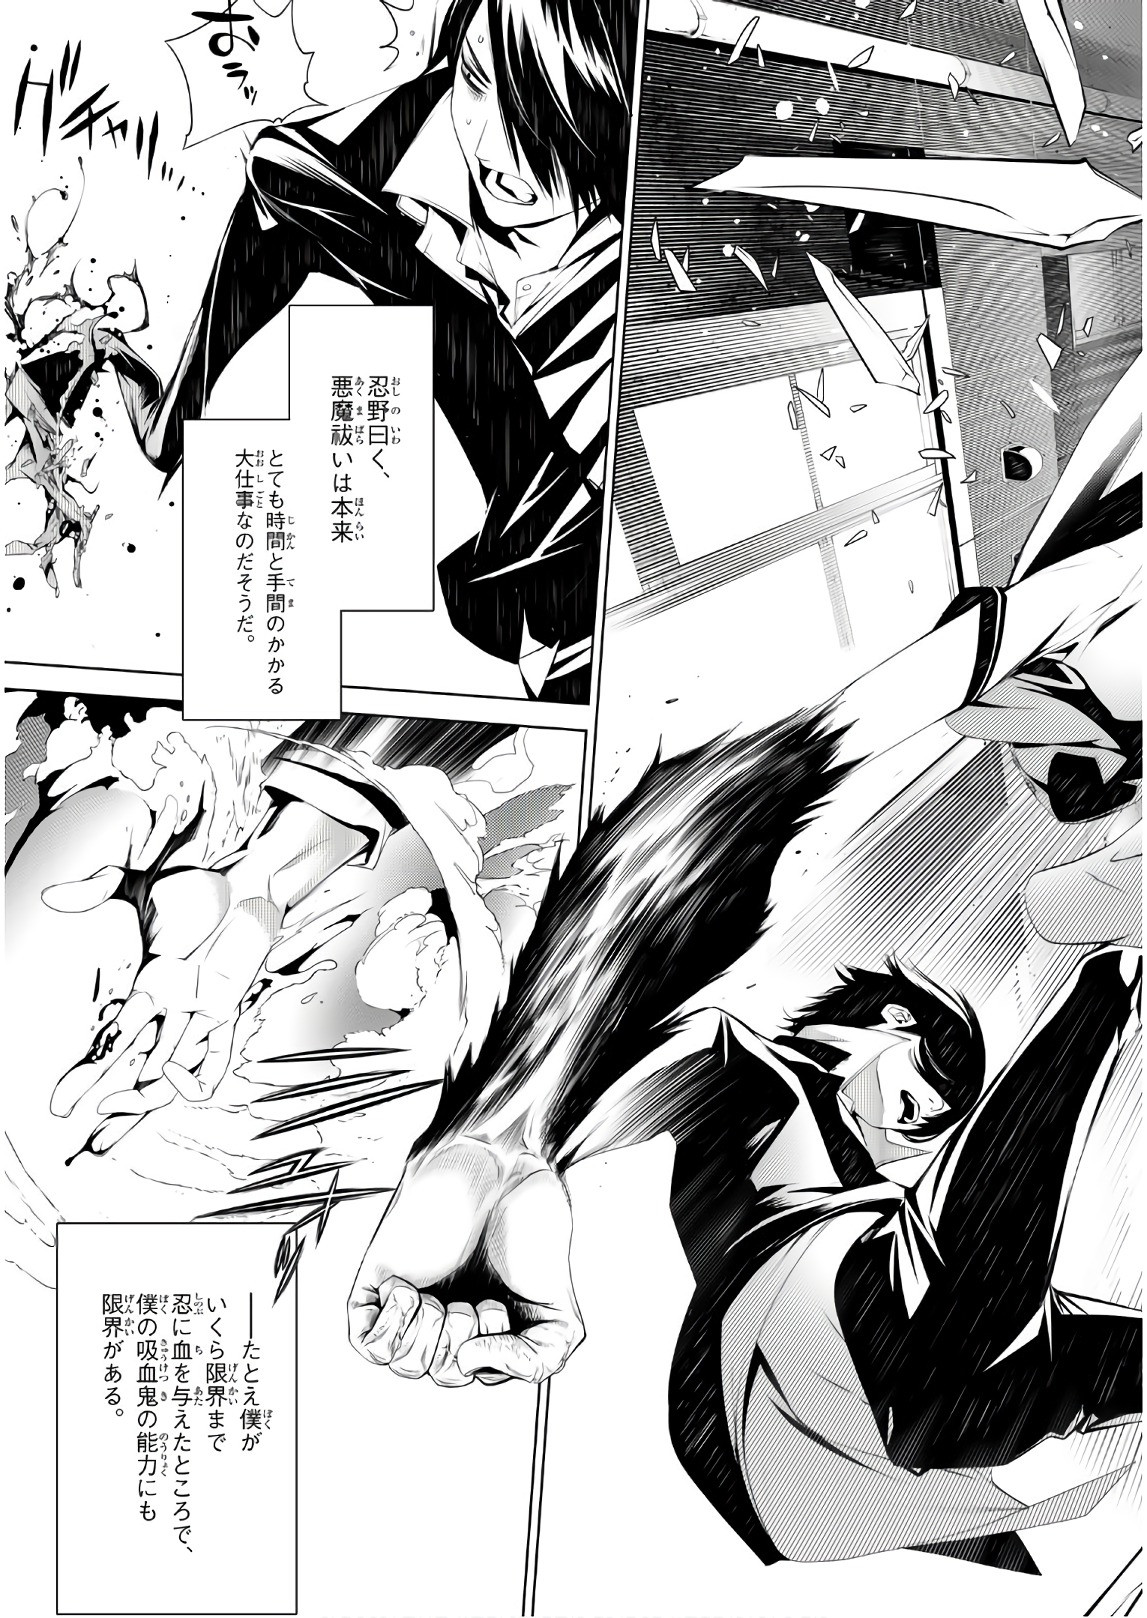 Bakemonogatari - Chapter 38 - Page 3